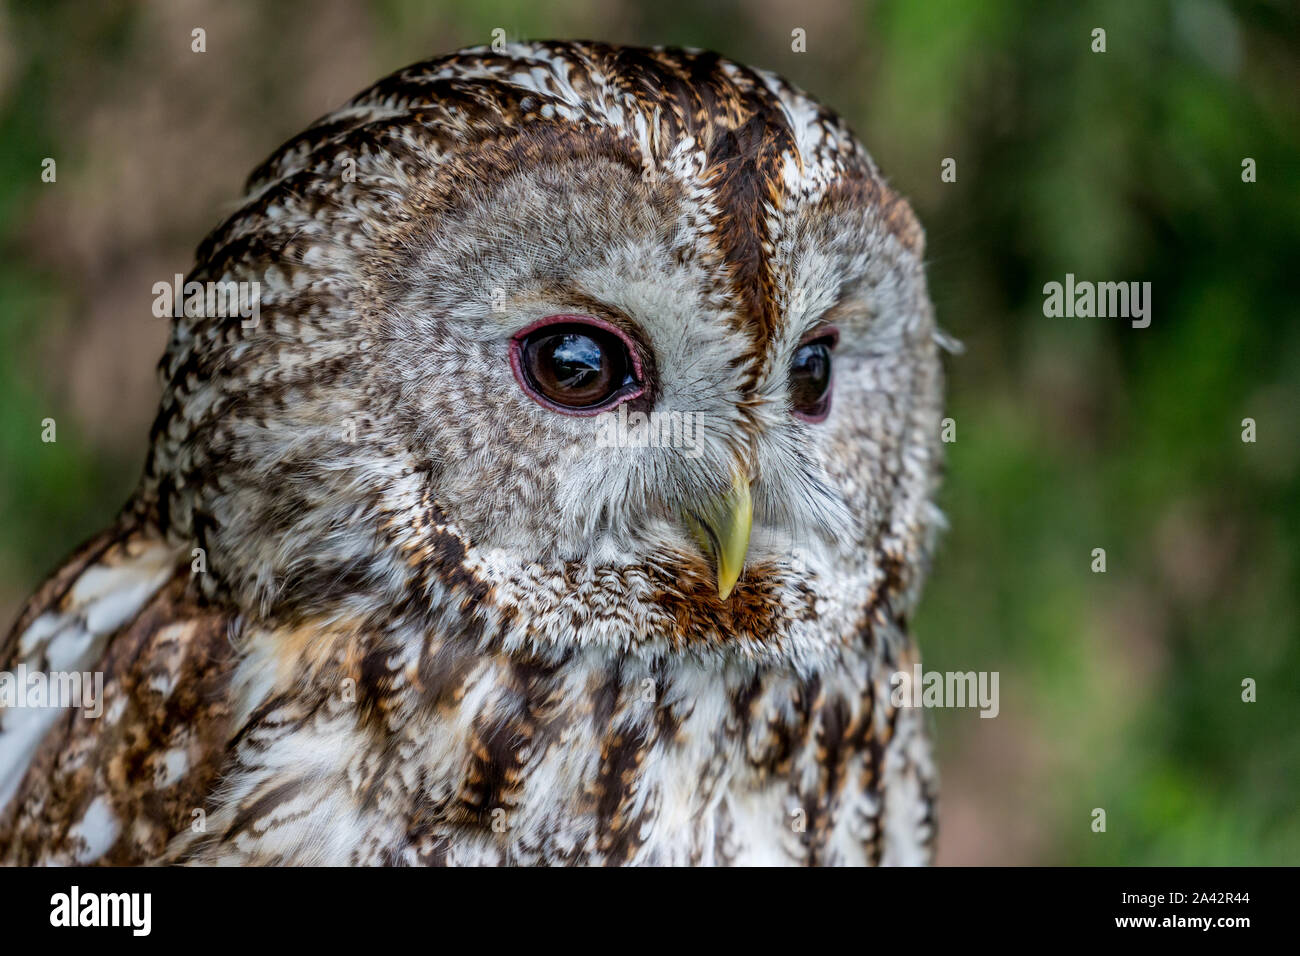 Beautiful close-up portrait of barred owl, Latin Strix Varia, over blurred green background, amazing bird headshot details, looking sideways Stock Photo